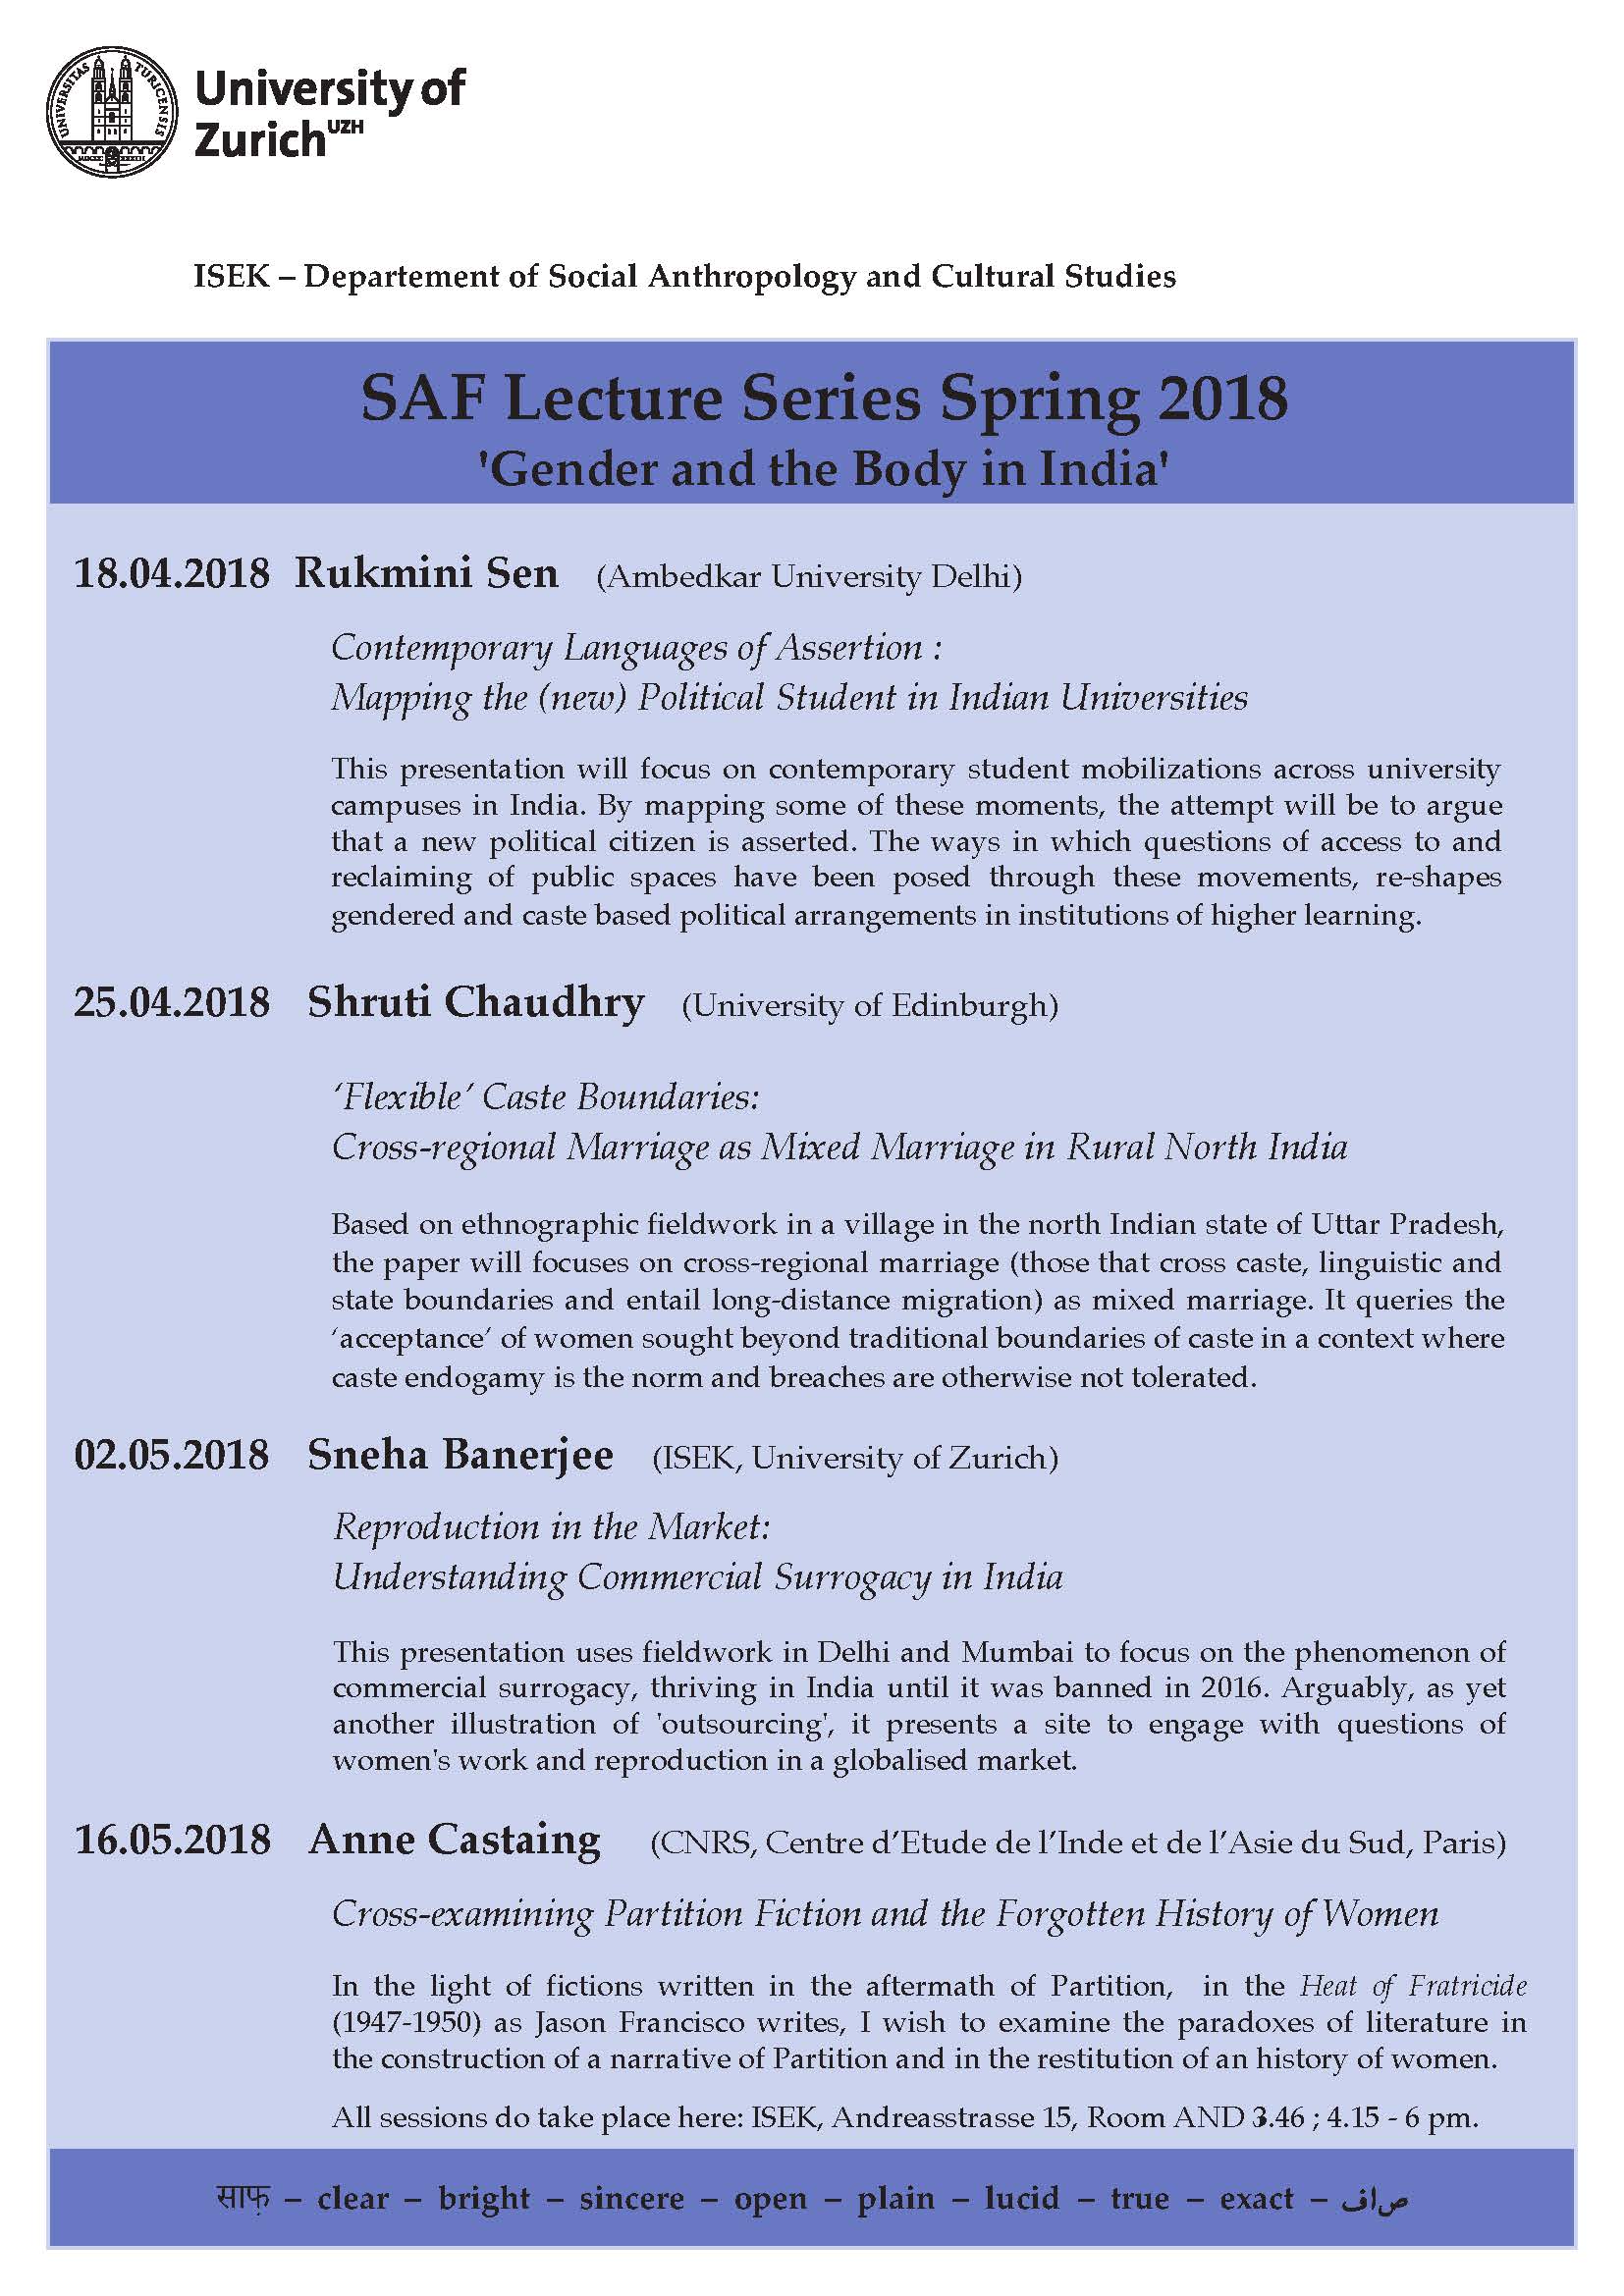 SAF Lecture Series FS18